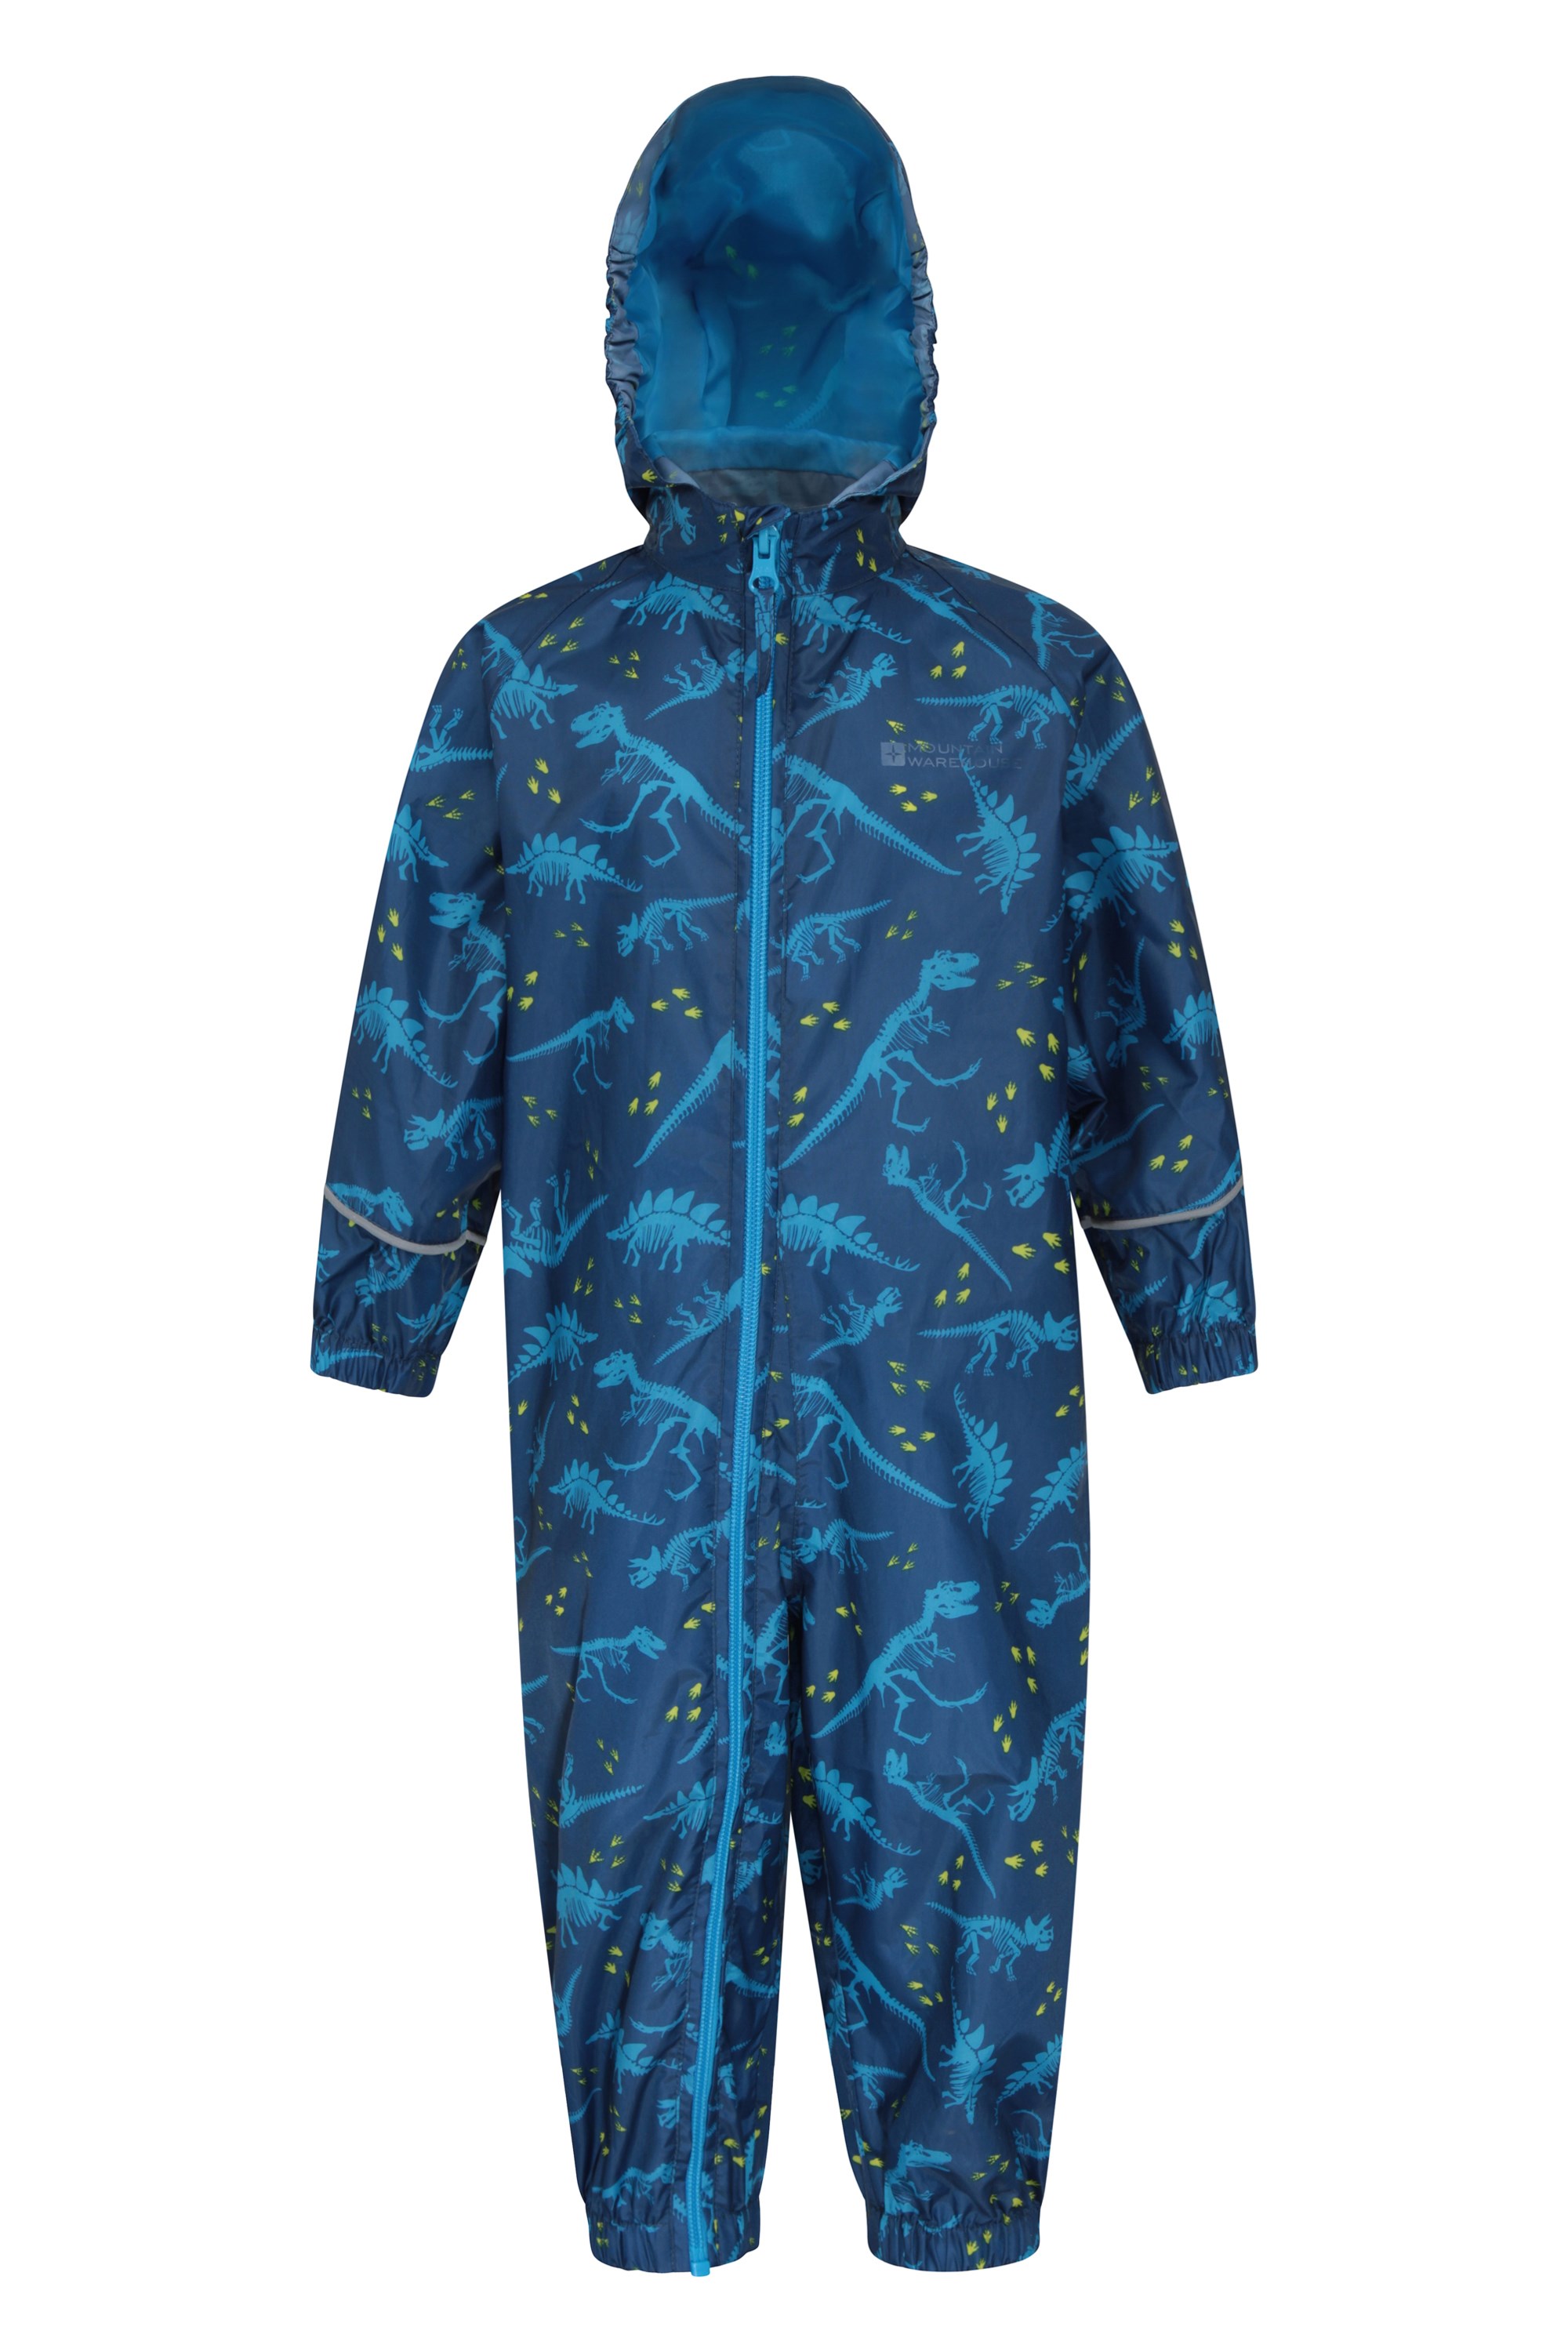 Spring Mountain Warehouse Spright Kids Printed Waterproof Rain Suit Raincoat 